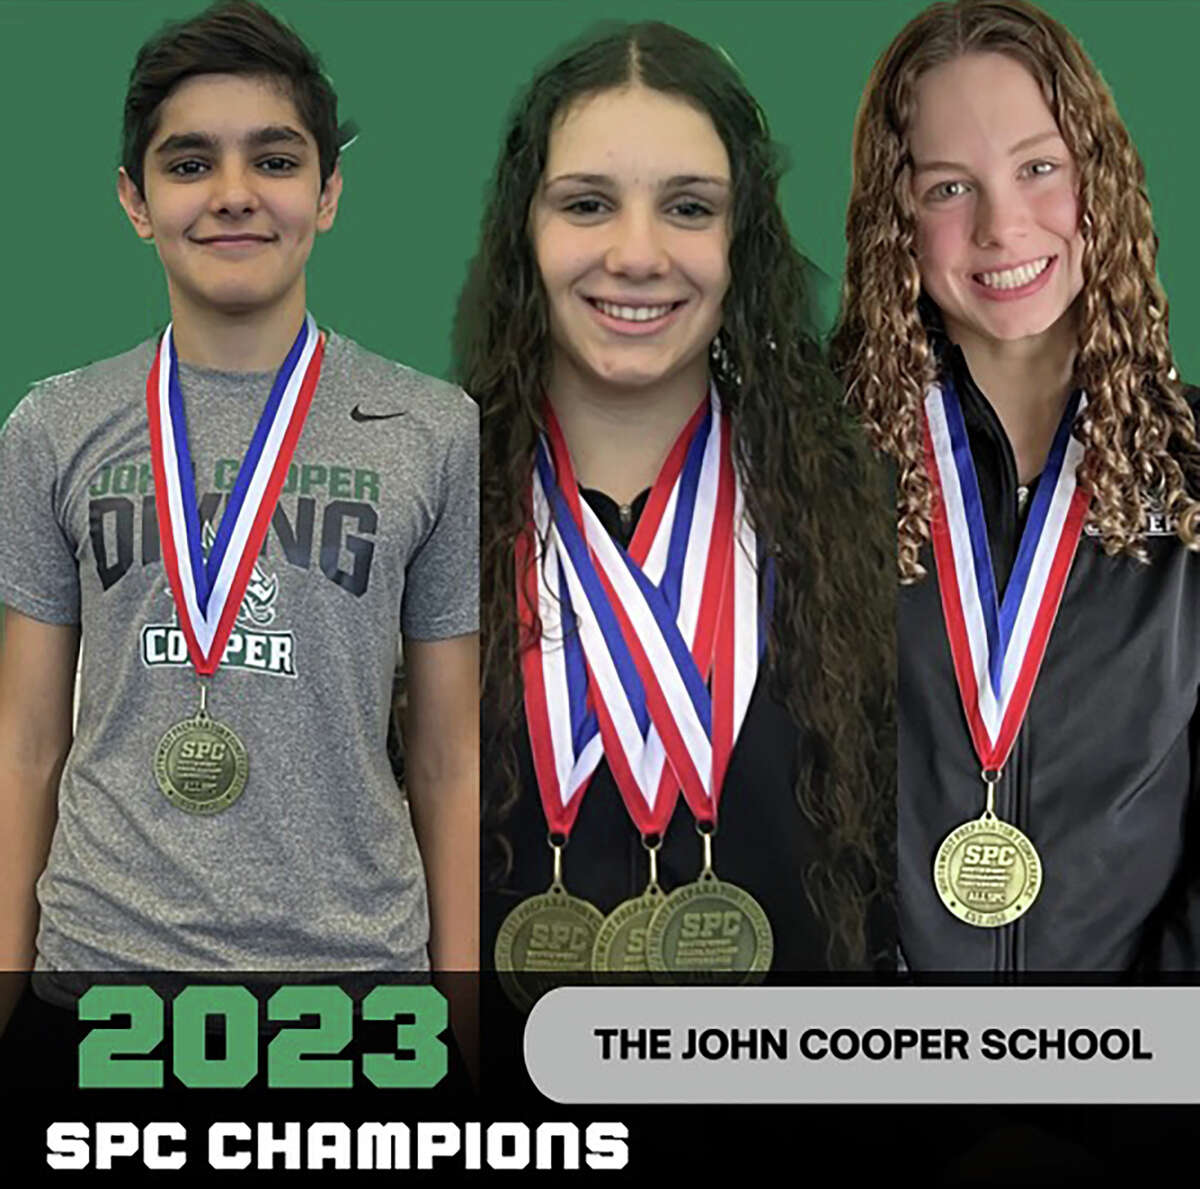 Seen here are the SPC champions of the John Cooper School swim program.